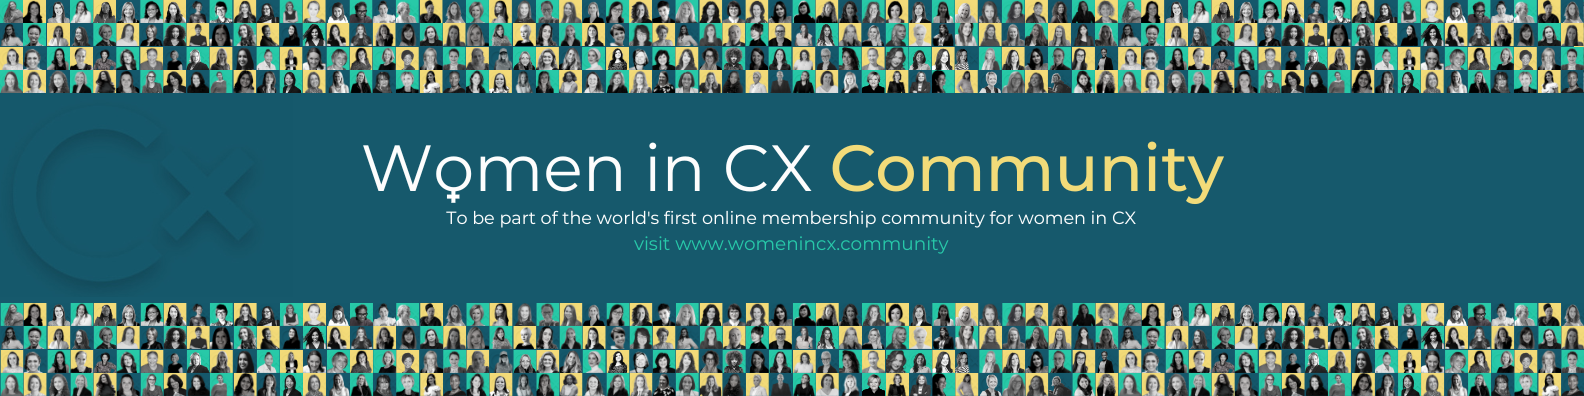 Inspiring Women In CX header image 1